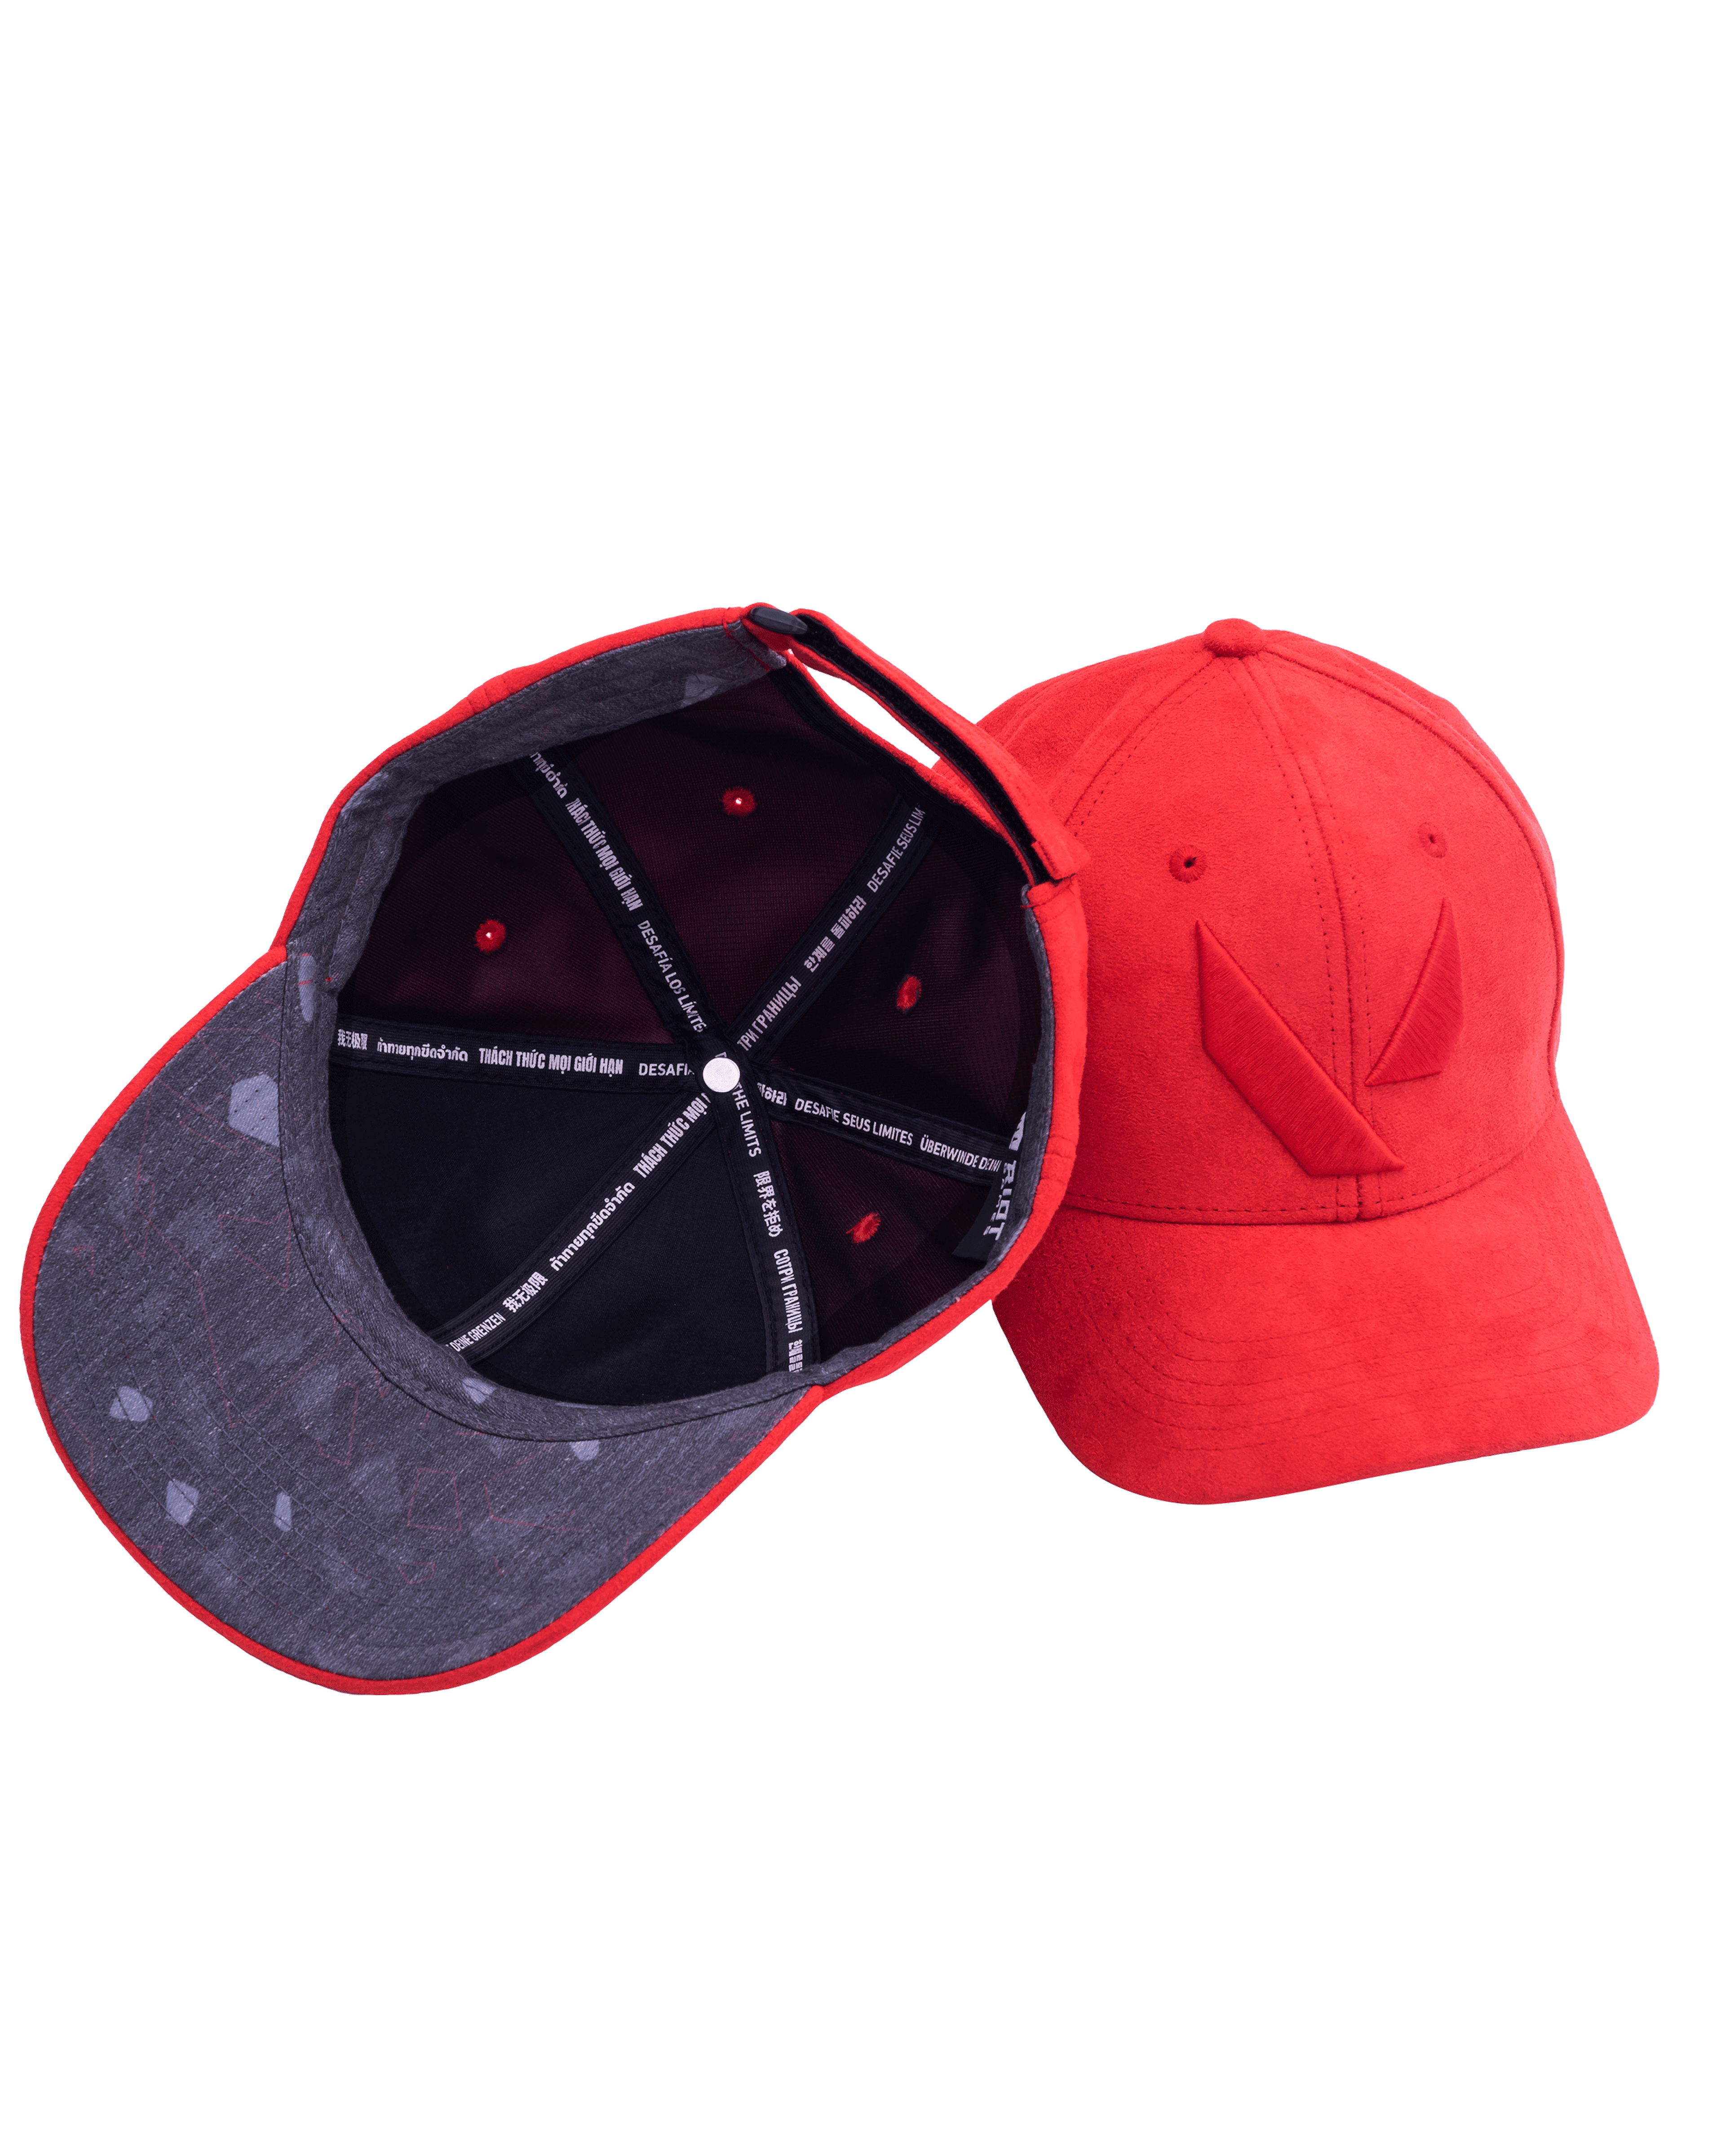 VALORANT "Defy The Limits" Baseball Cap (Red)